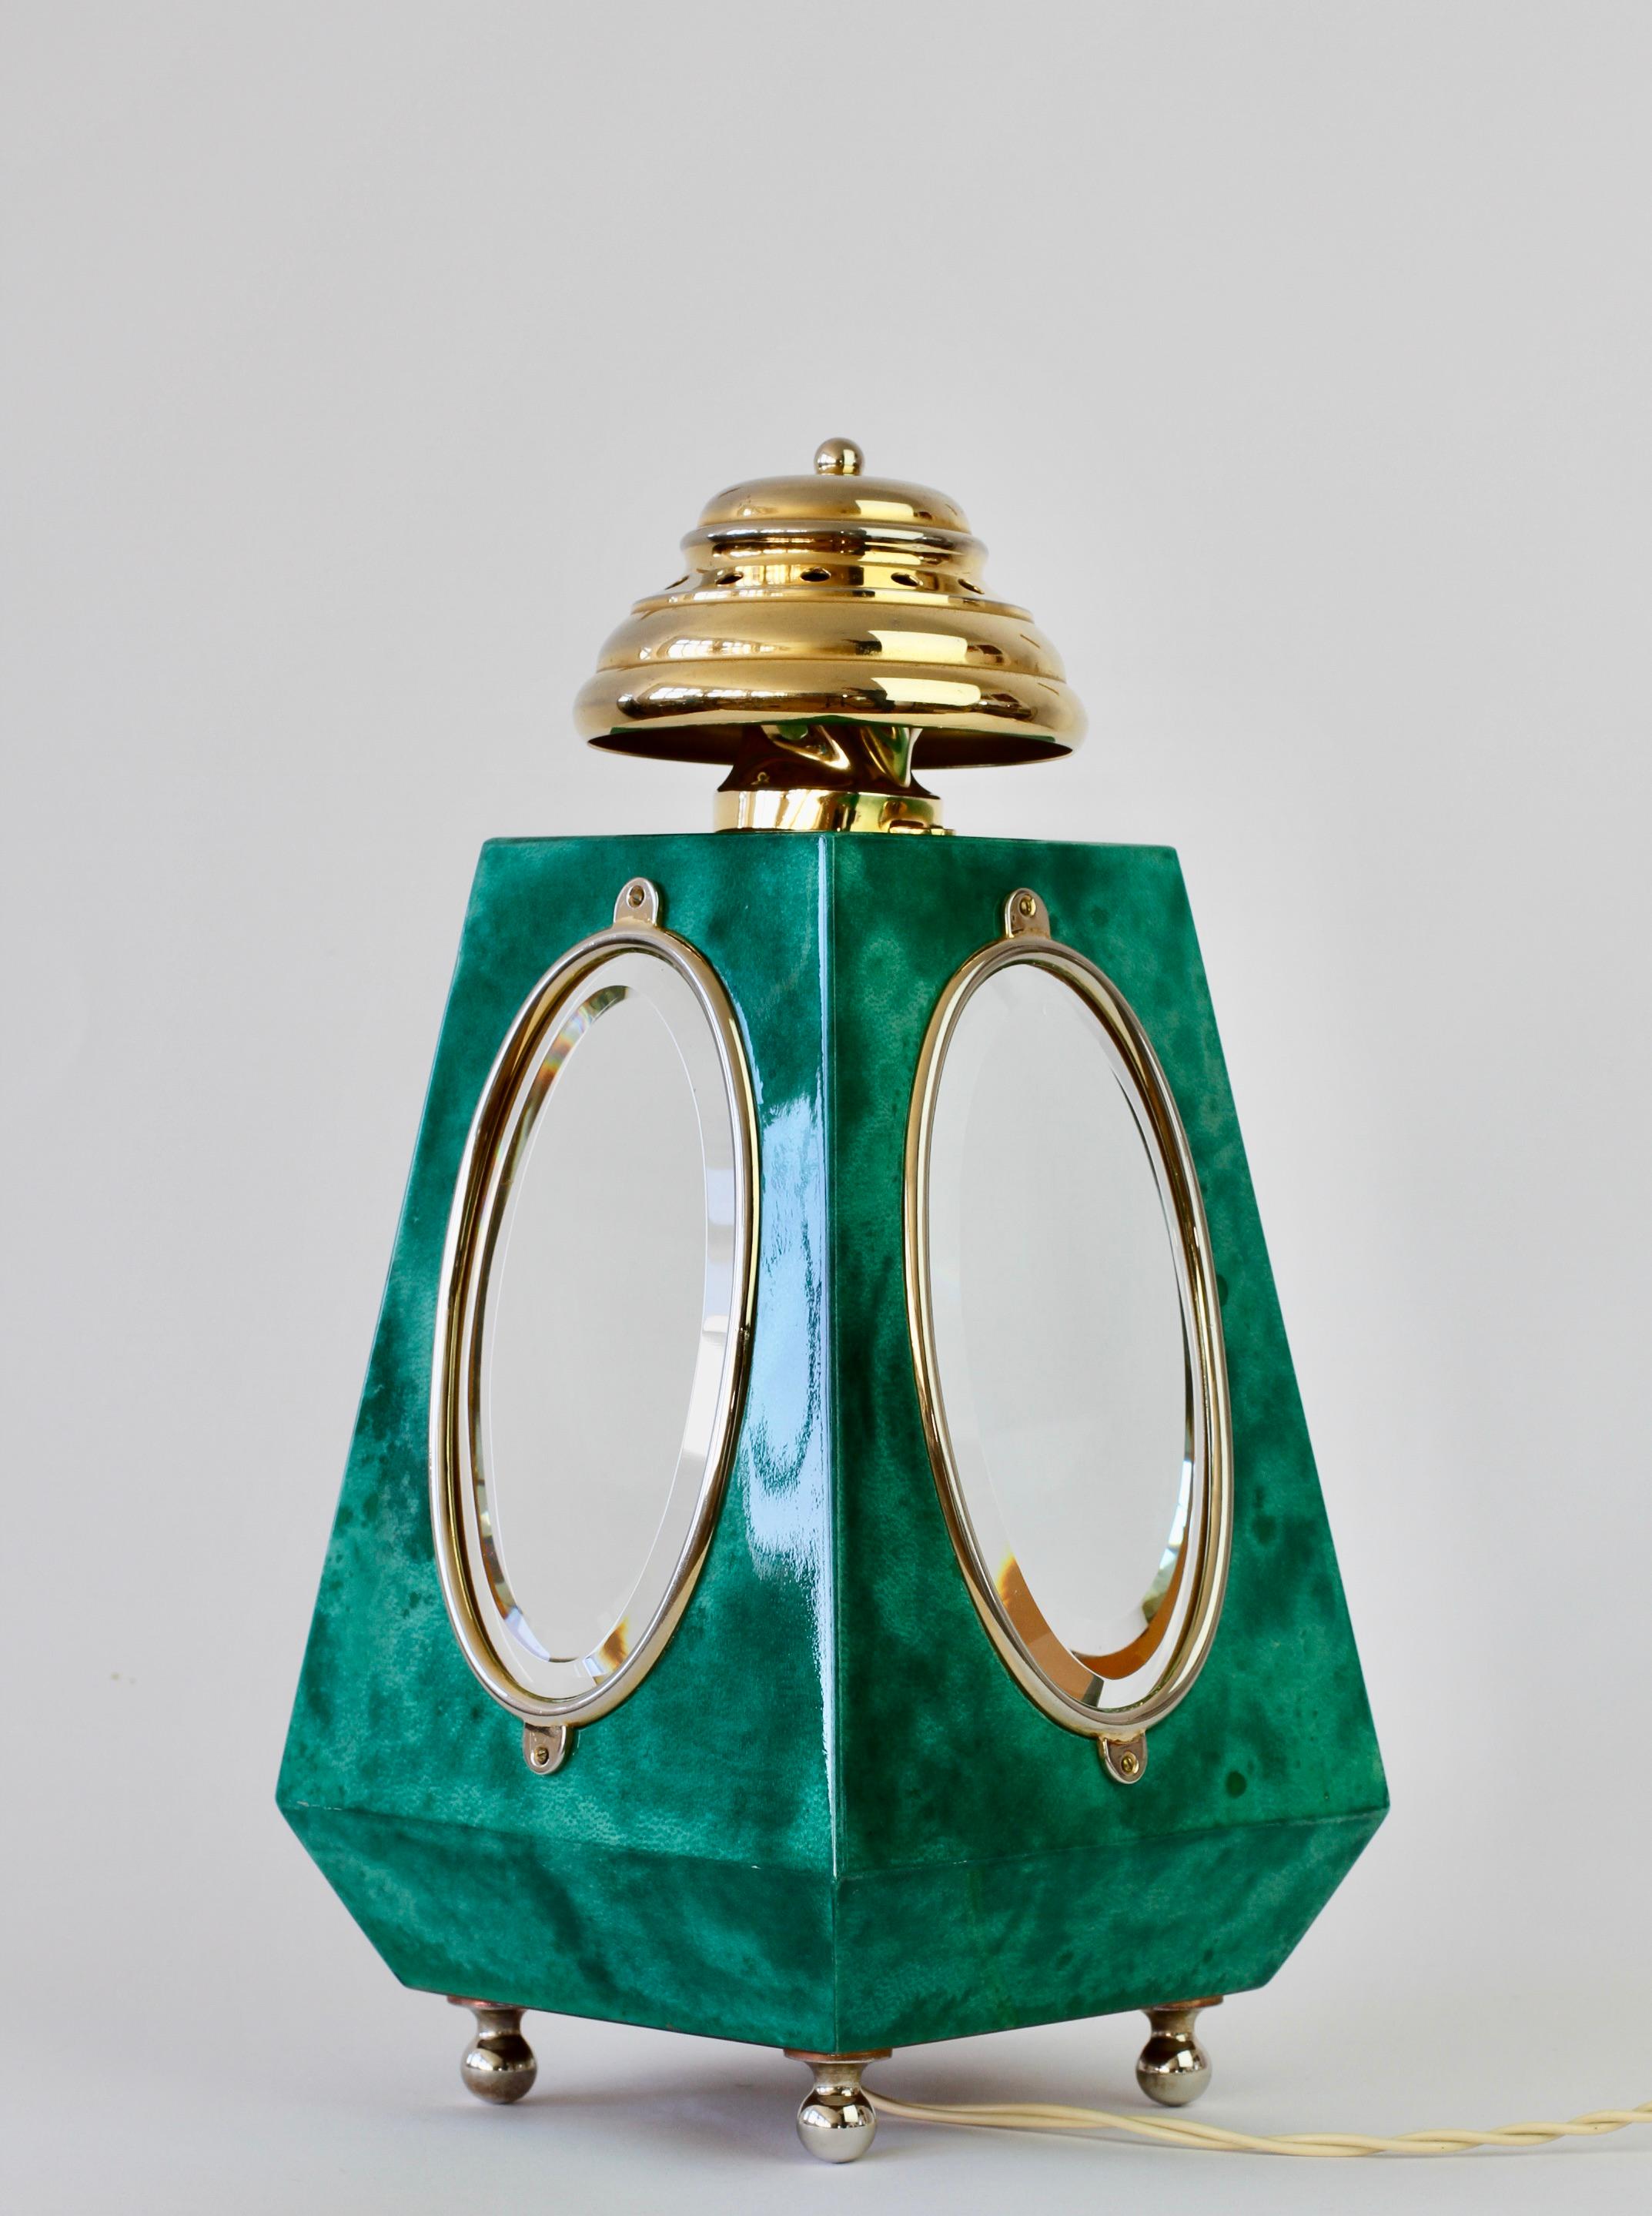 Aldo Tura 1960s Midcentury Table Lamp / Lantern in Green Italian Goatskin 6